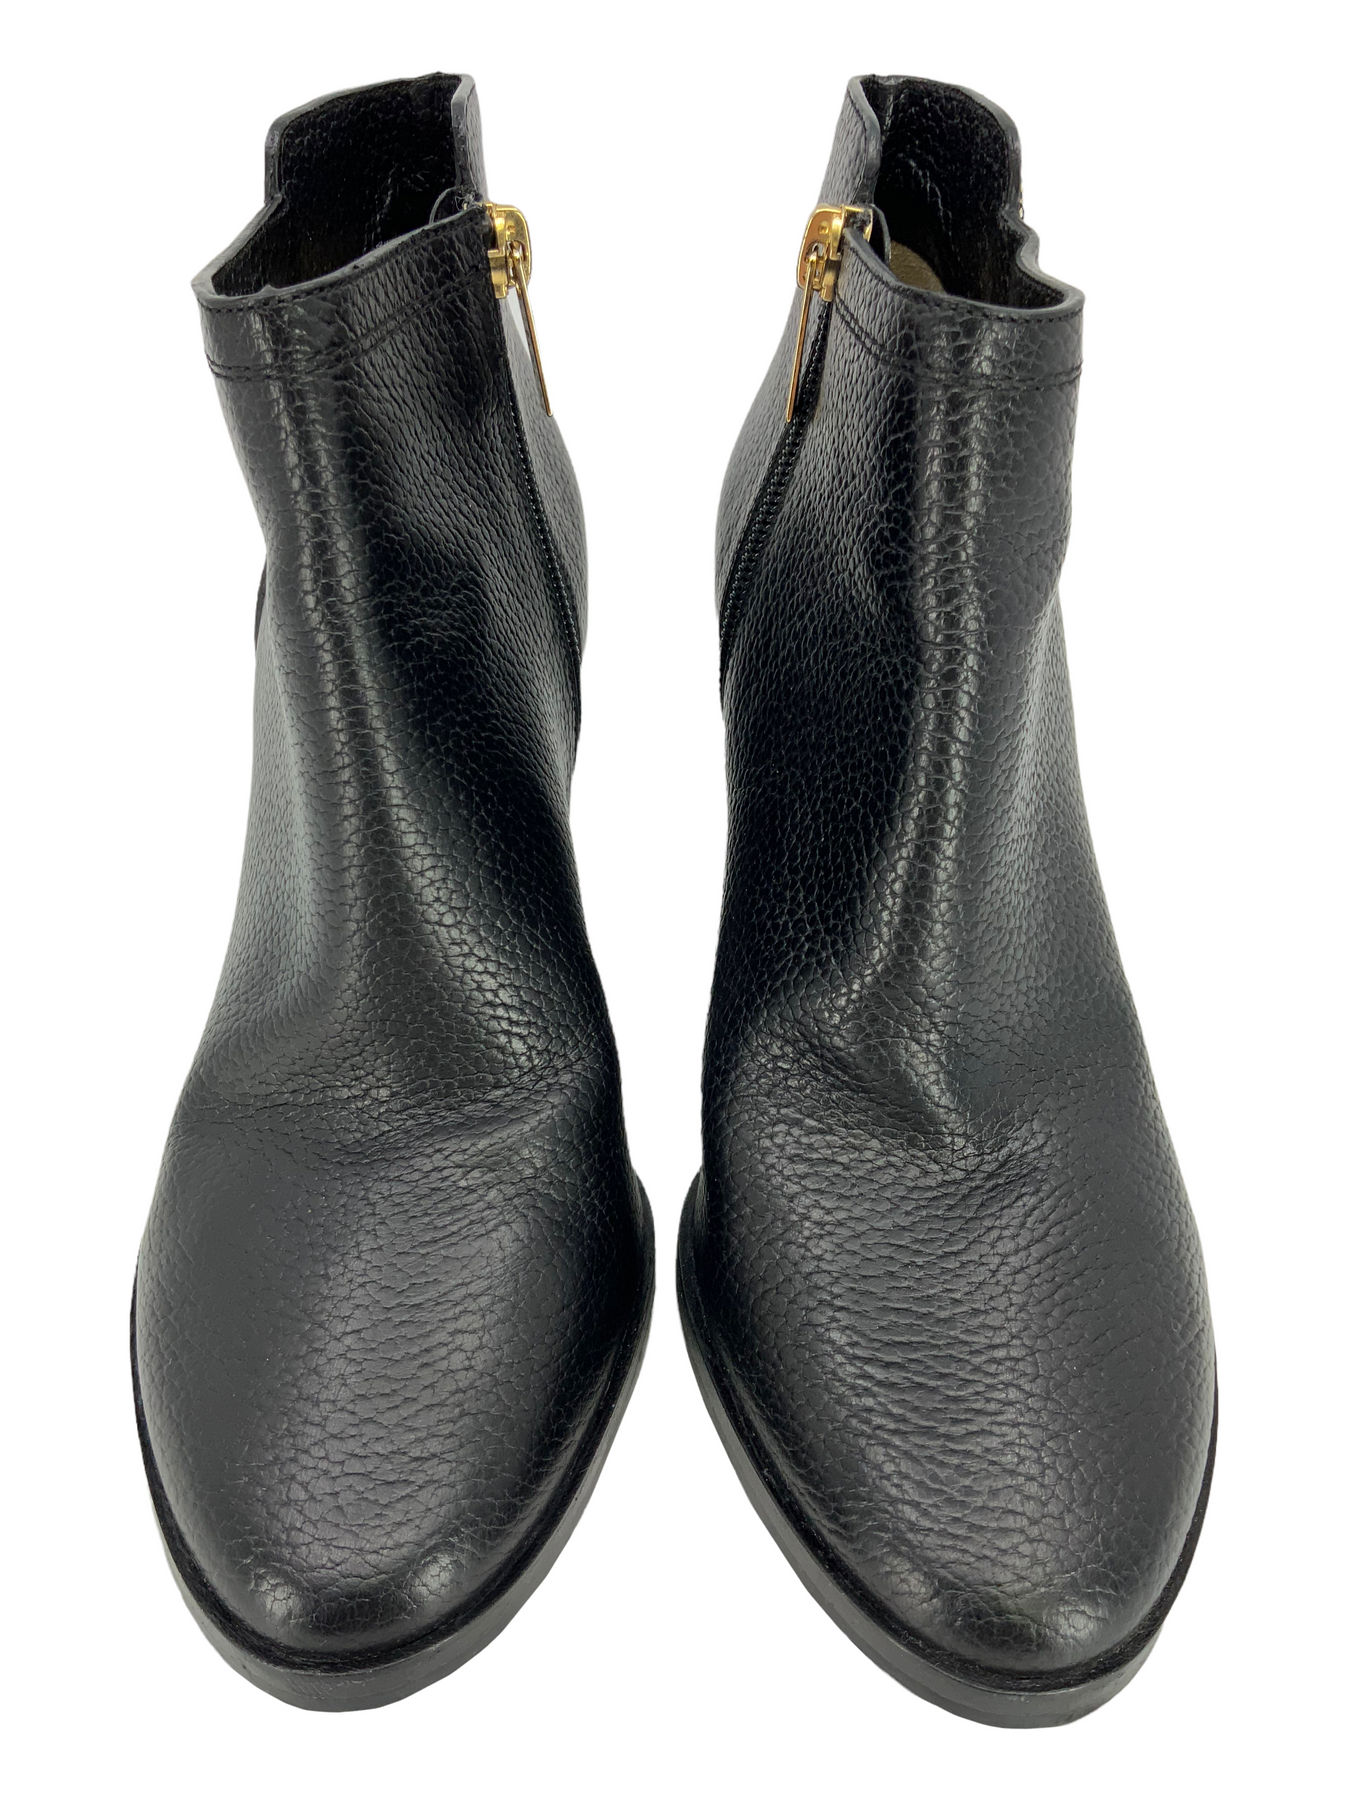 Studio W Black Leather Heeled Ankle Boots Size 6 US | eBay